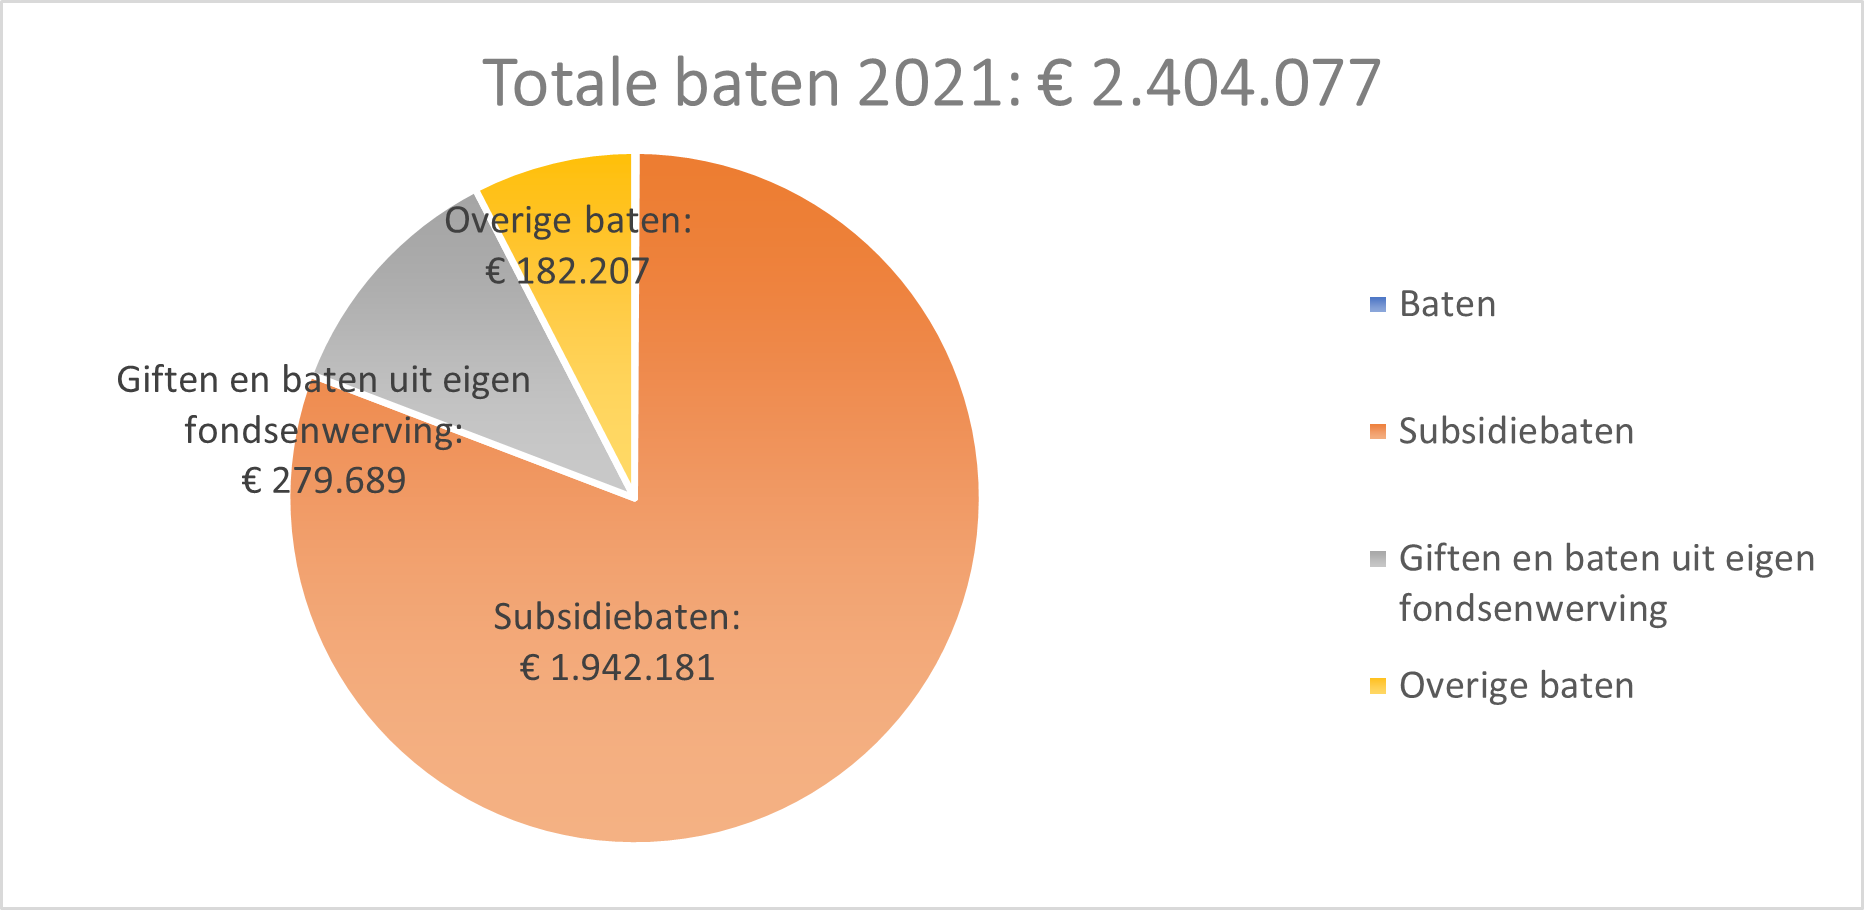 Totale baten 2021: €2.404.077